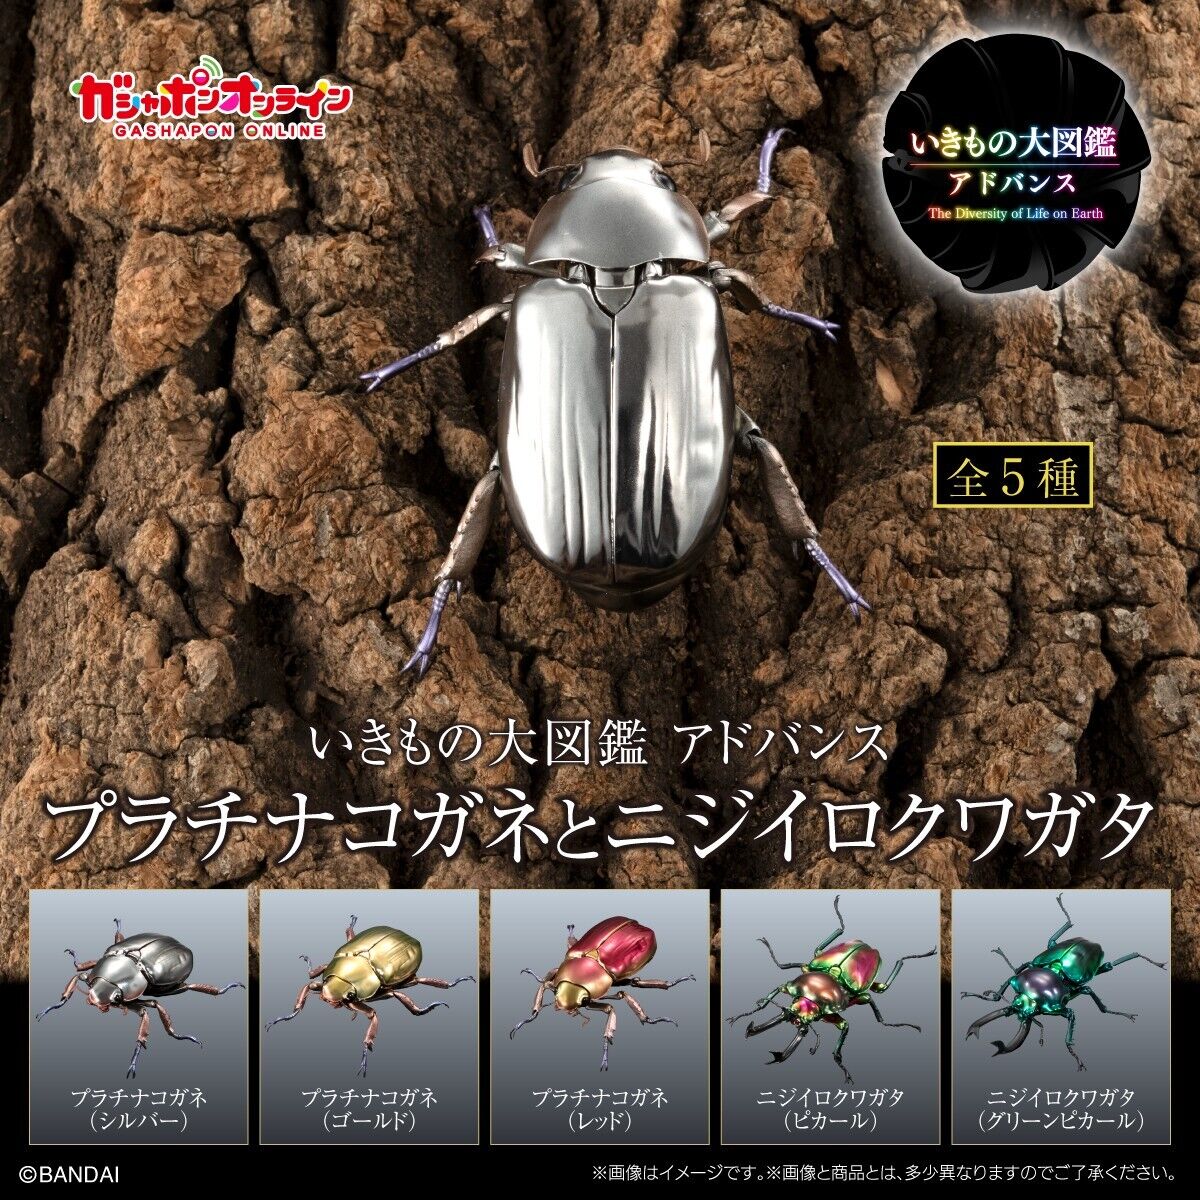 PSL Advanced Creatures Encyclopedia Platinum Stag Beetle and Rainbow Stag Beetle